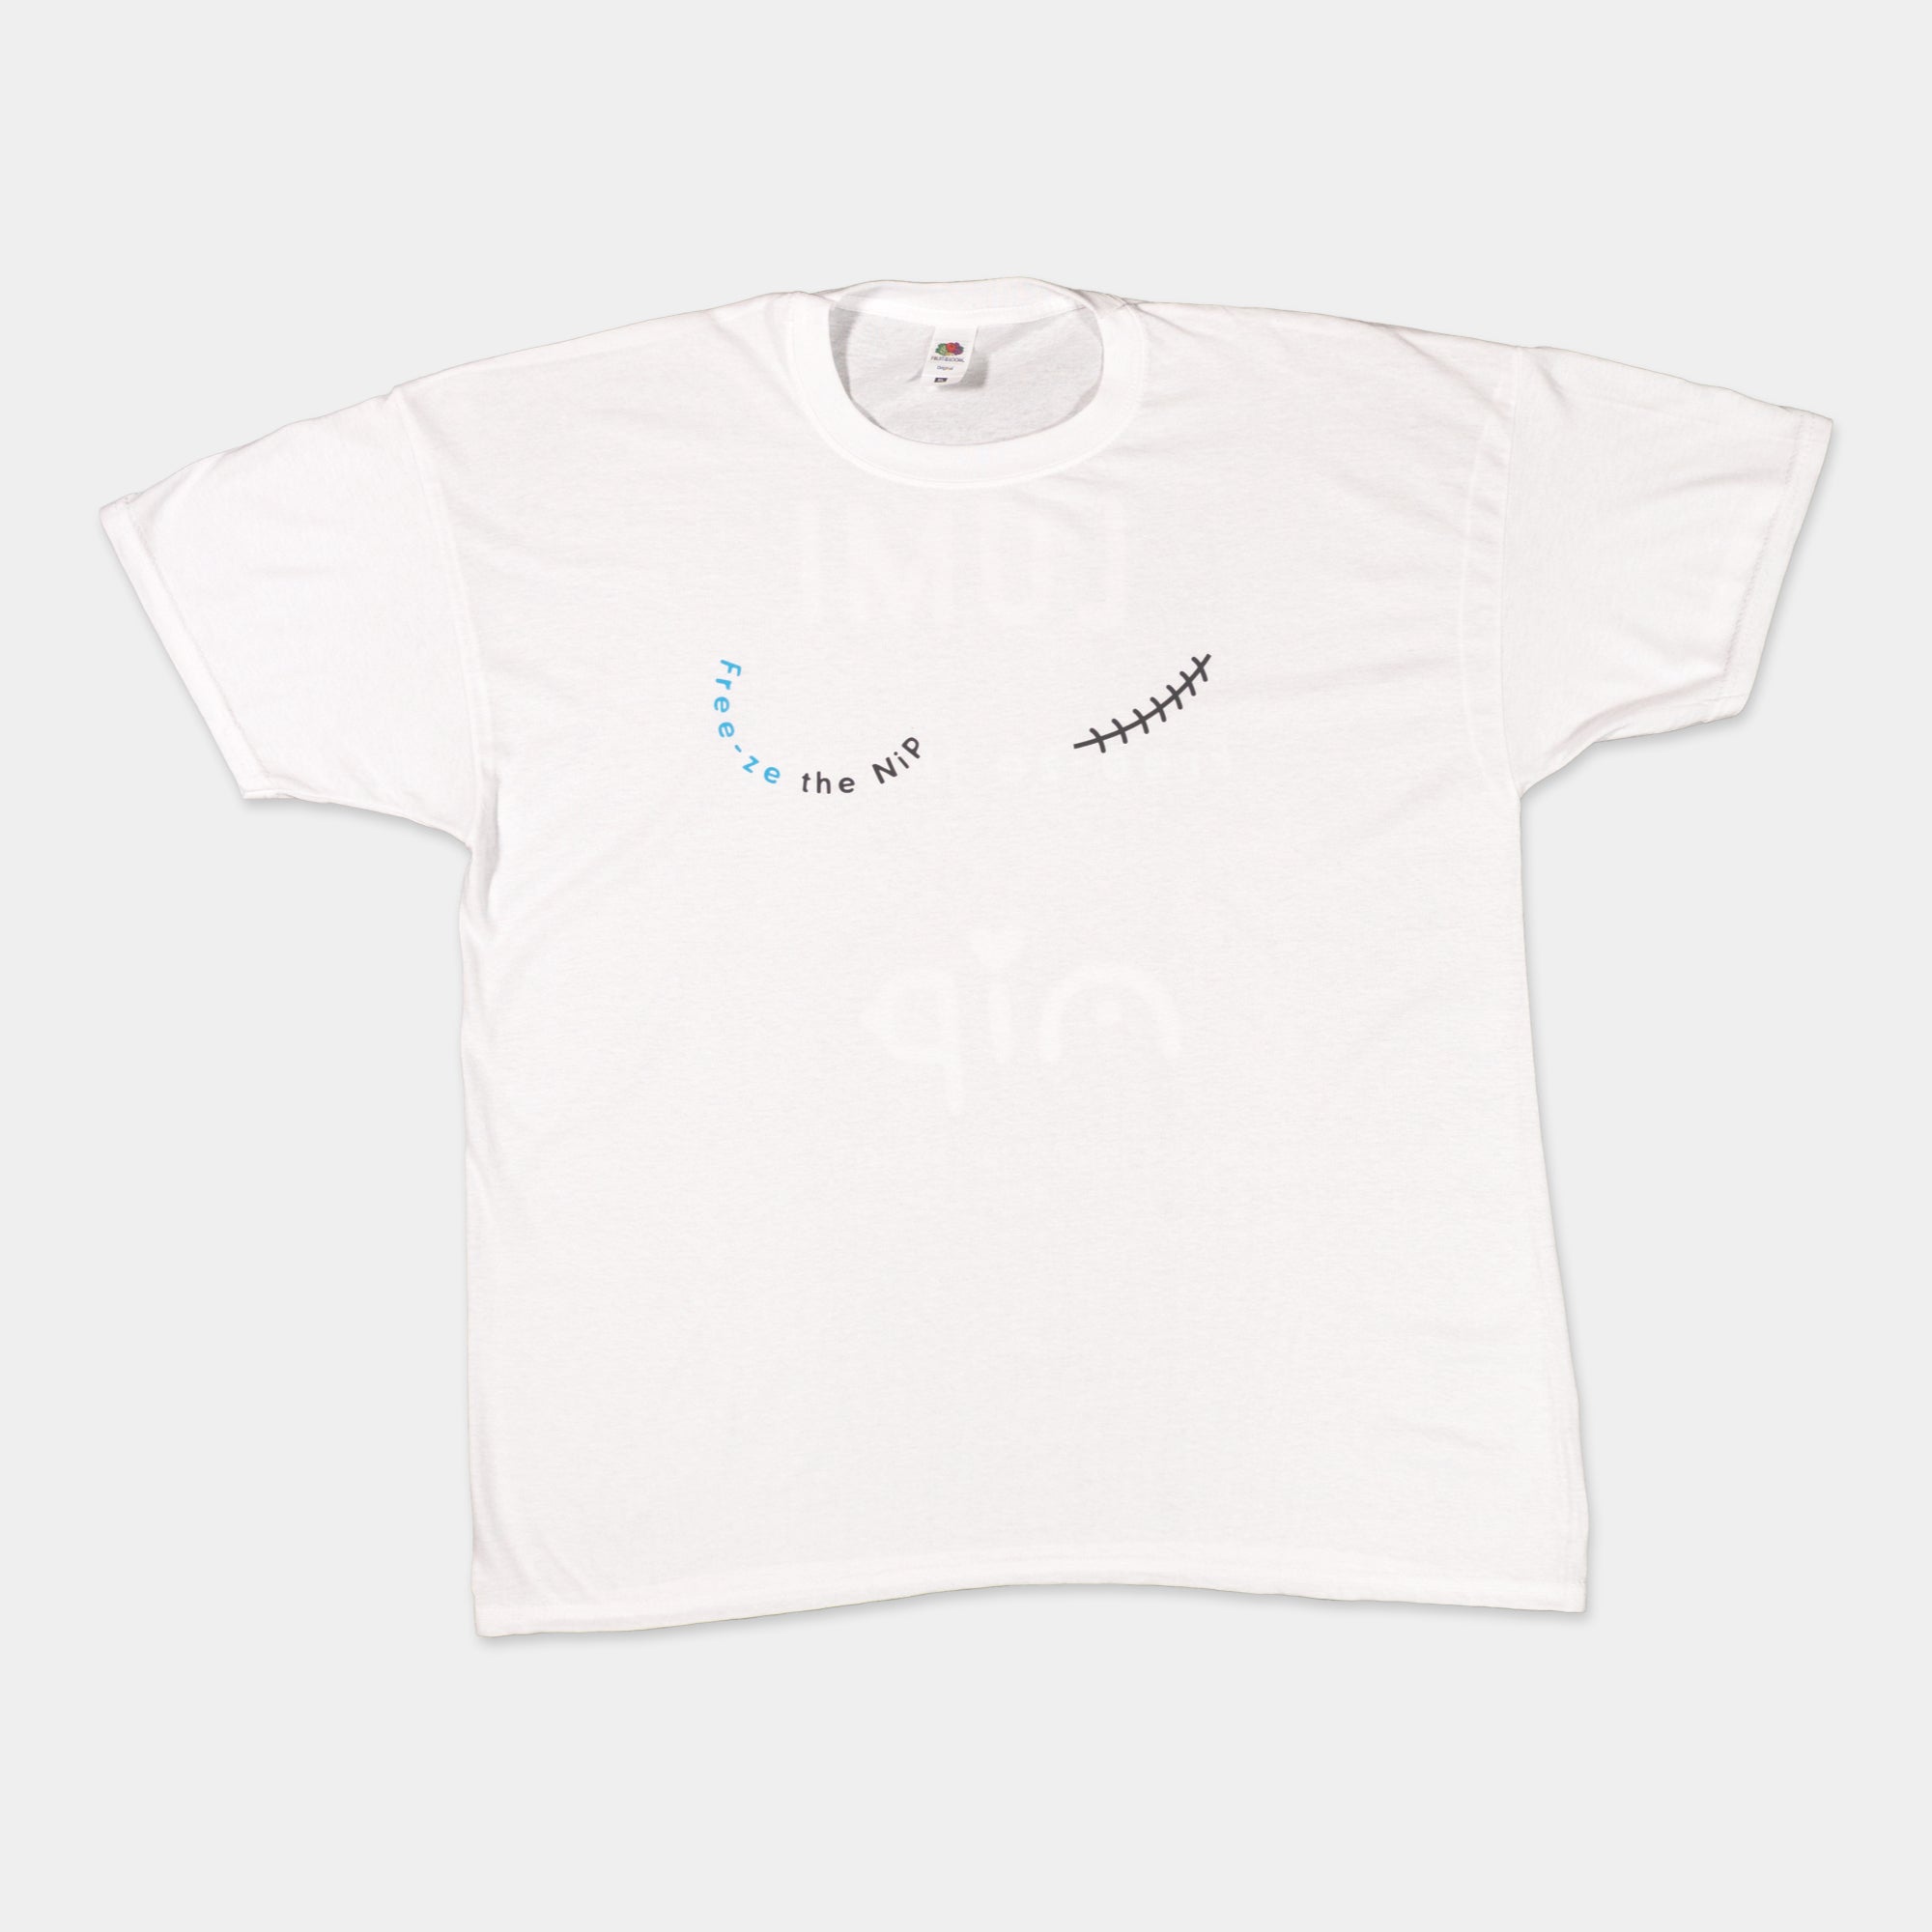 Free-ze the Nip t-shirt and Recovery Pod bundle